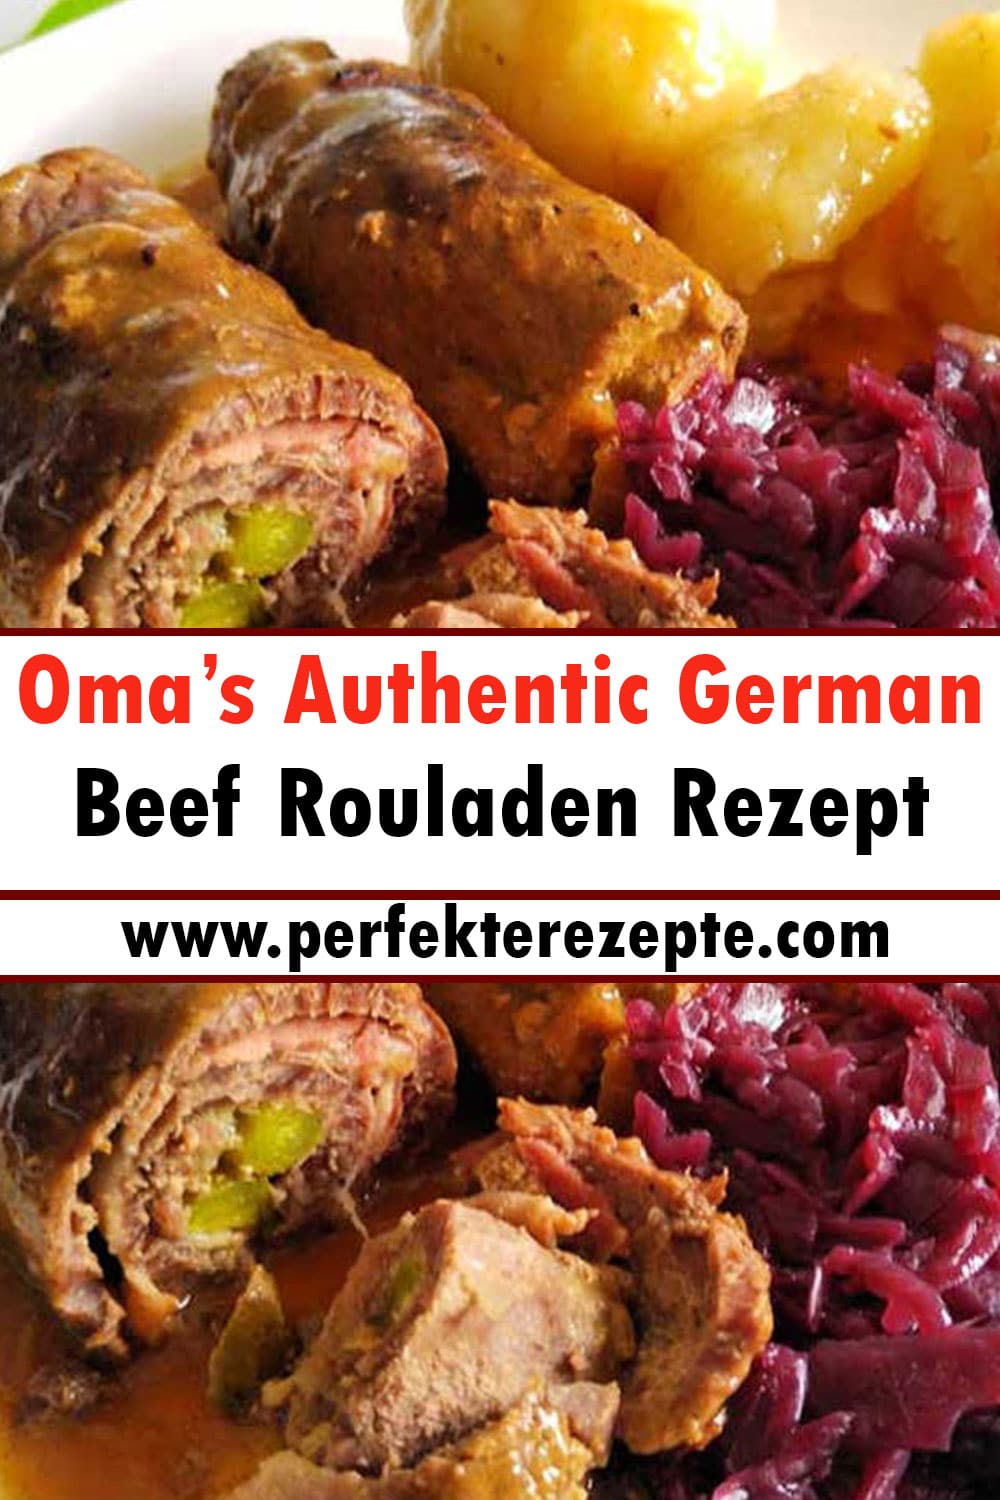 Oma’s Authentic German Beef Rouladen Rezept